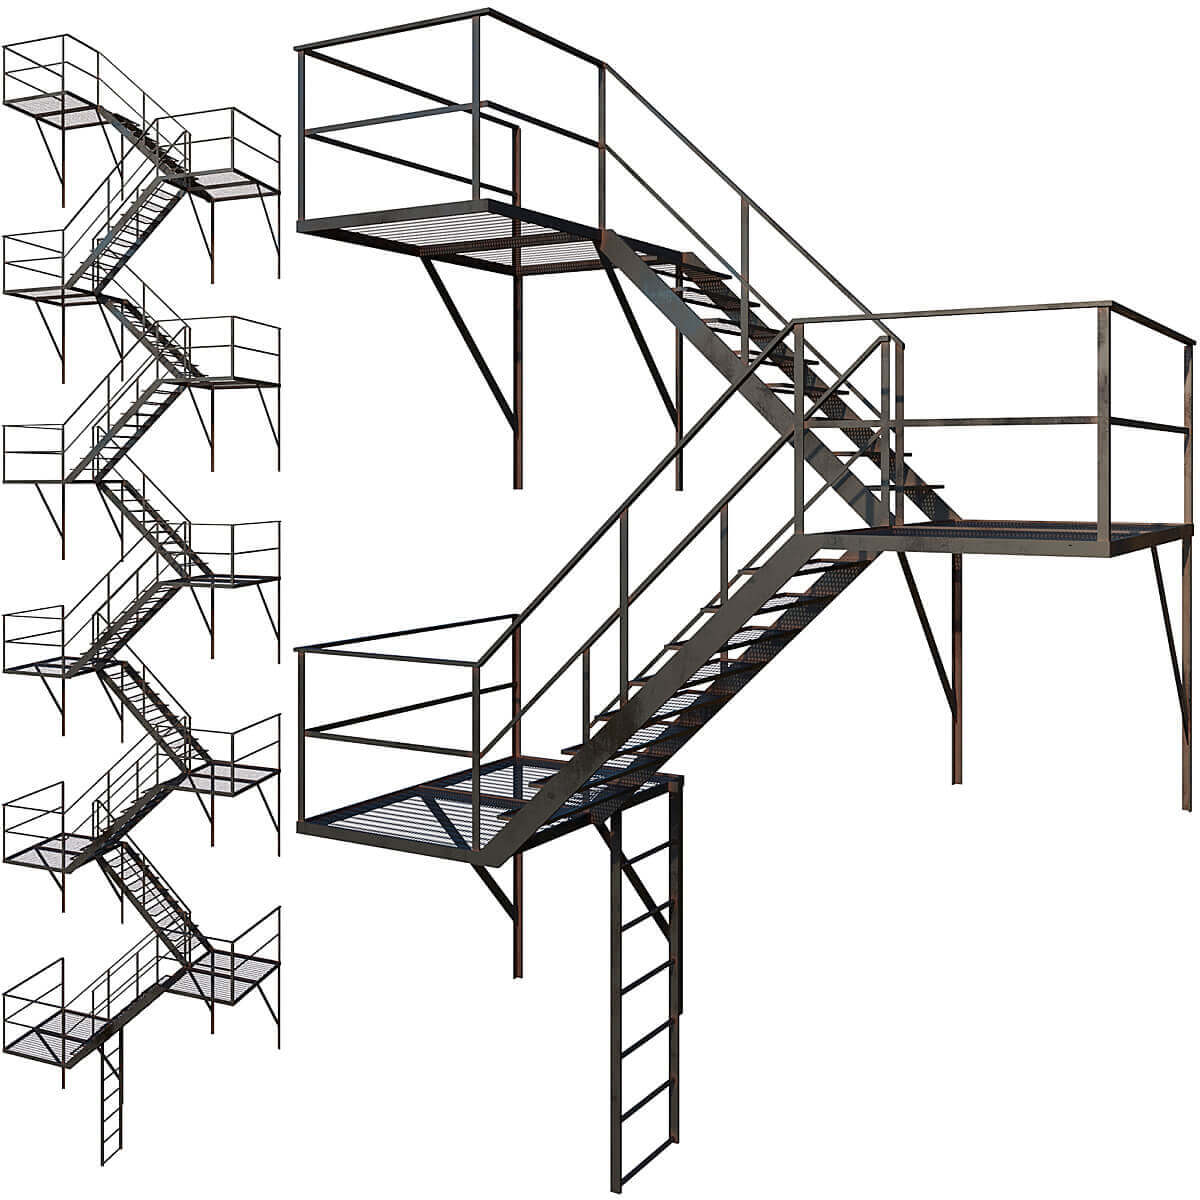 室外消防楼梯low poly 3D模型（FBX,MAX）插图